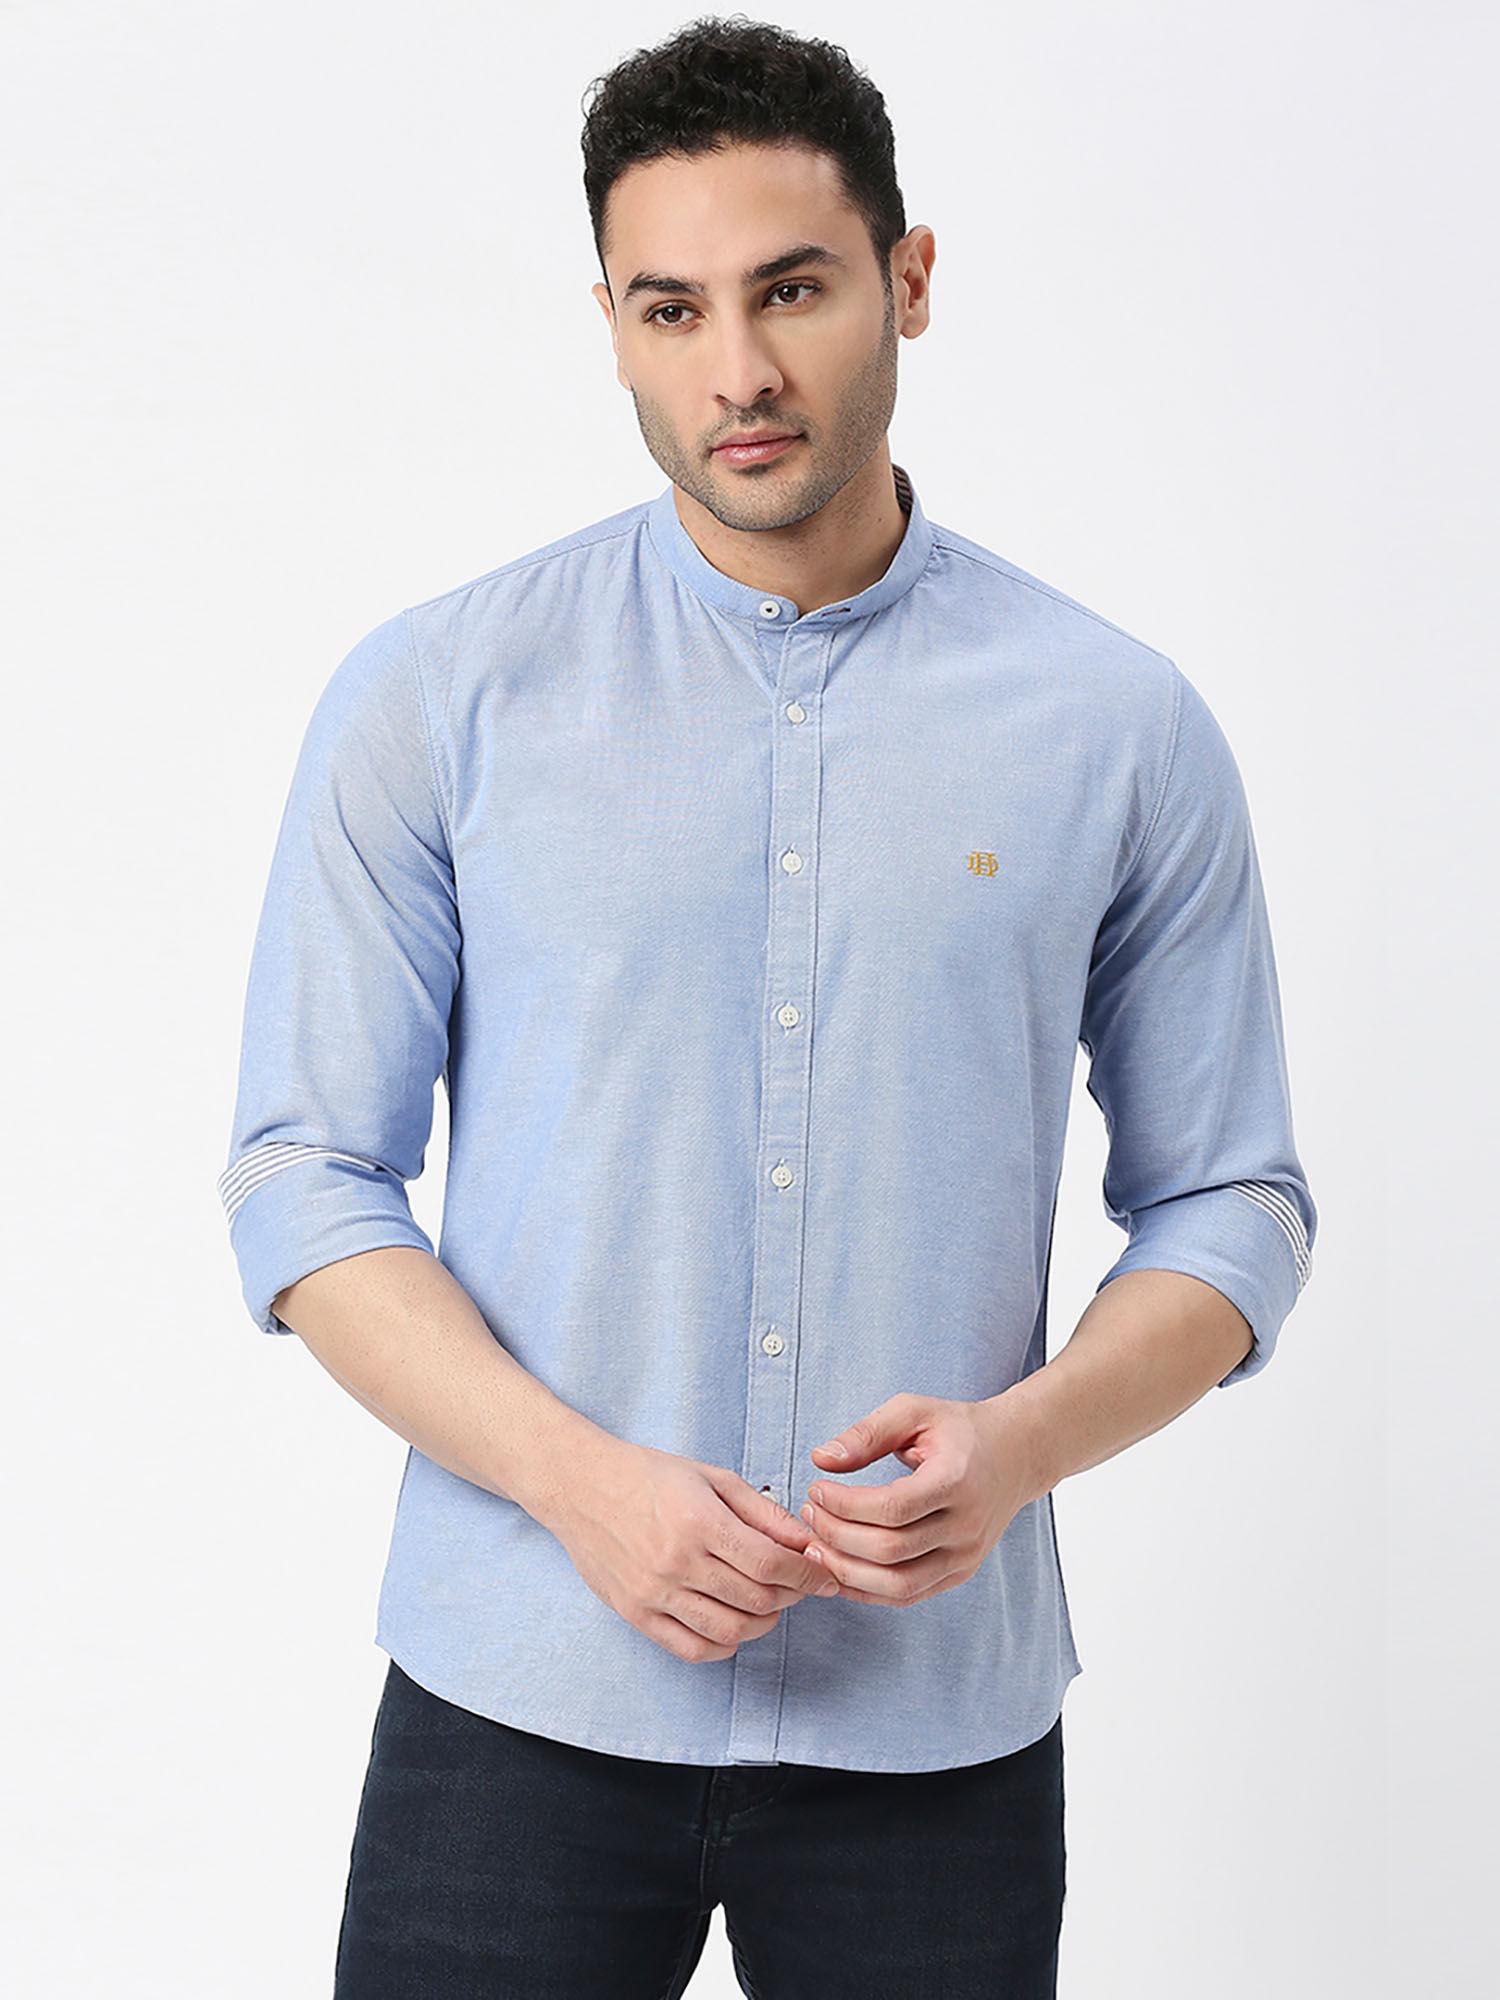 sea blue oxford plain shirt with mandarin collar